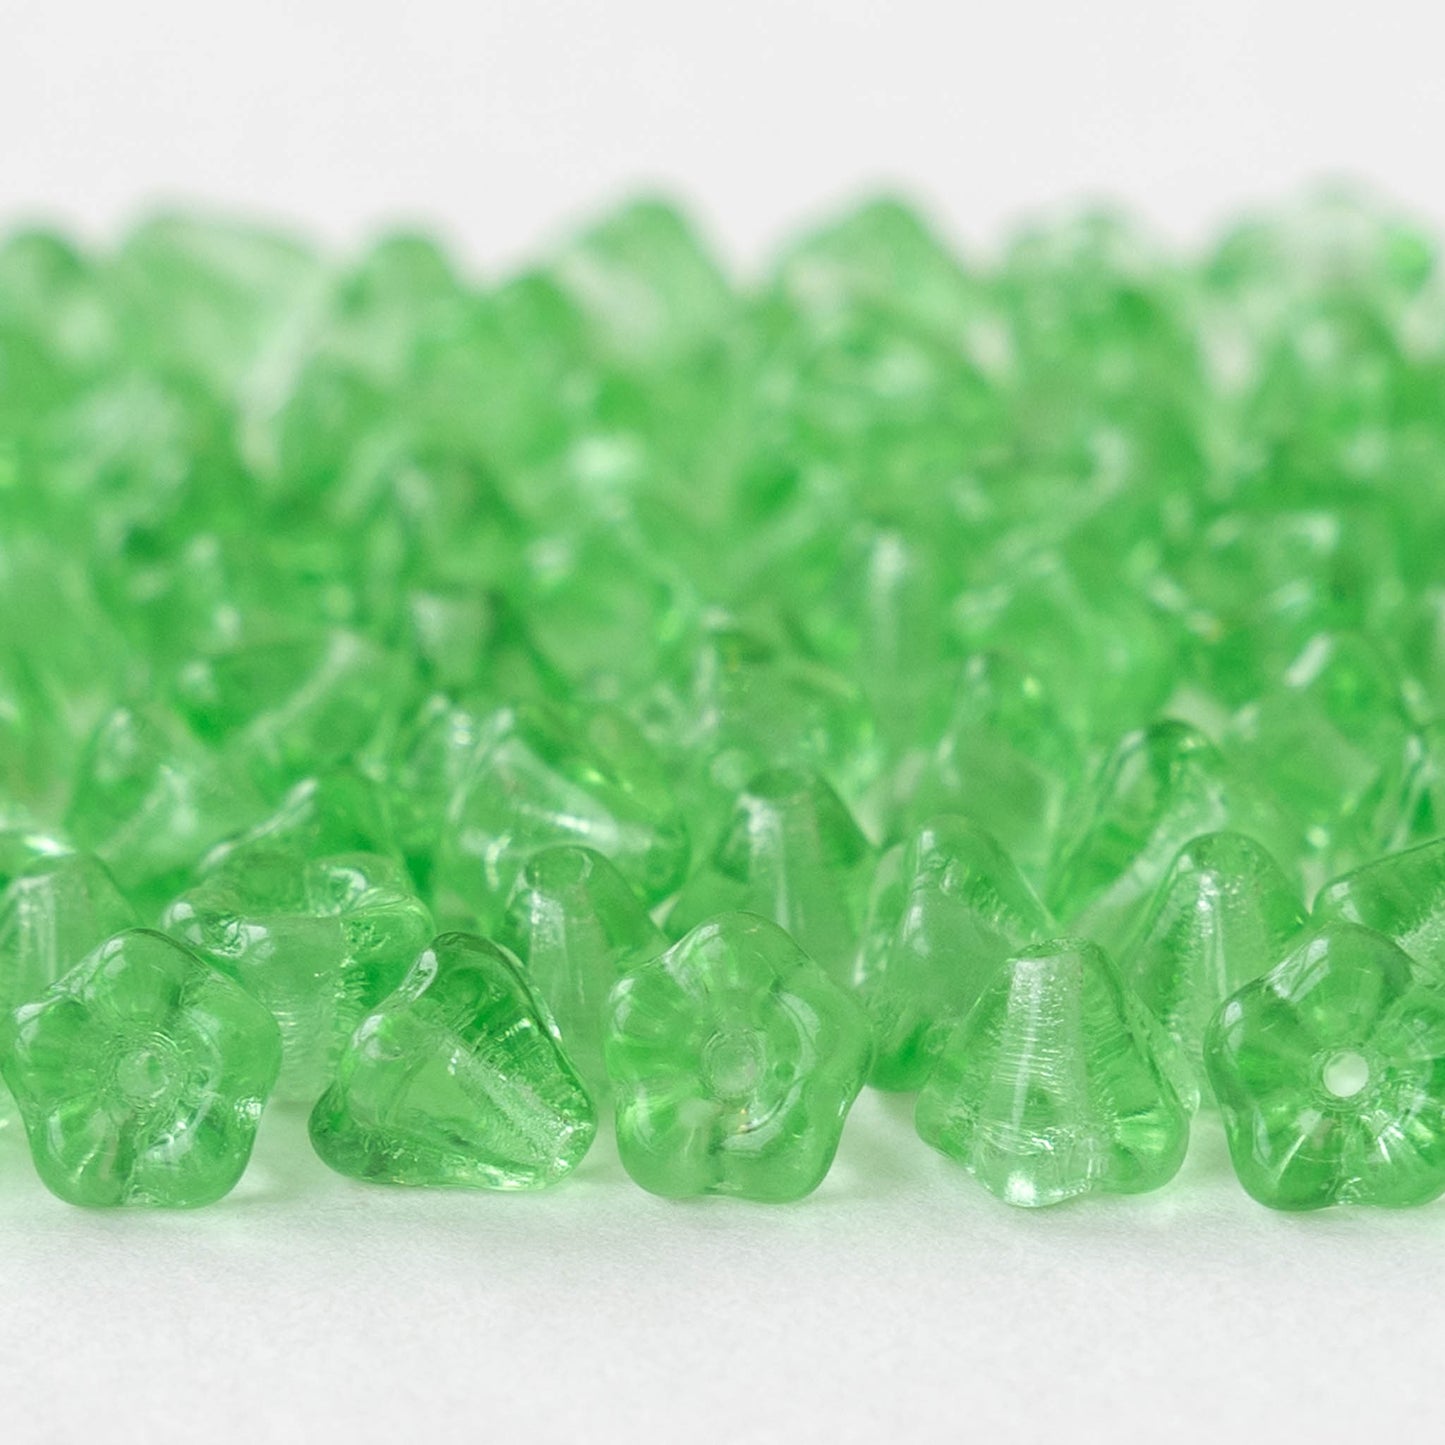 4x6mm Glass Flower Beads - Peridot Green - 75